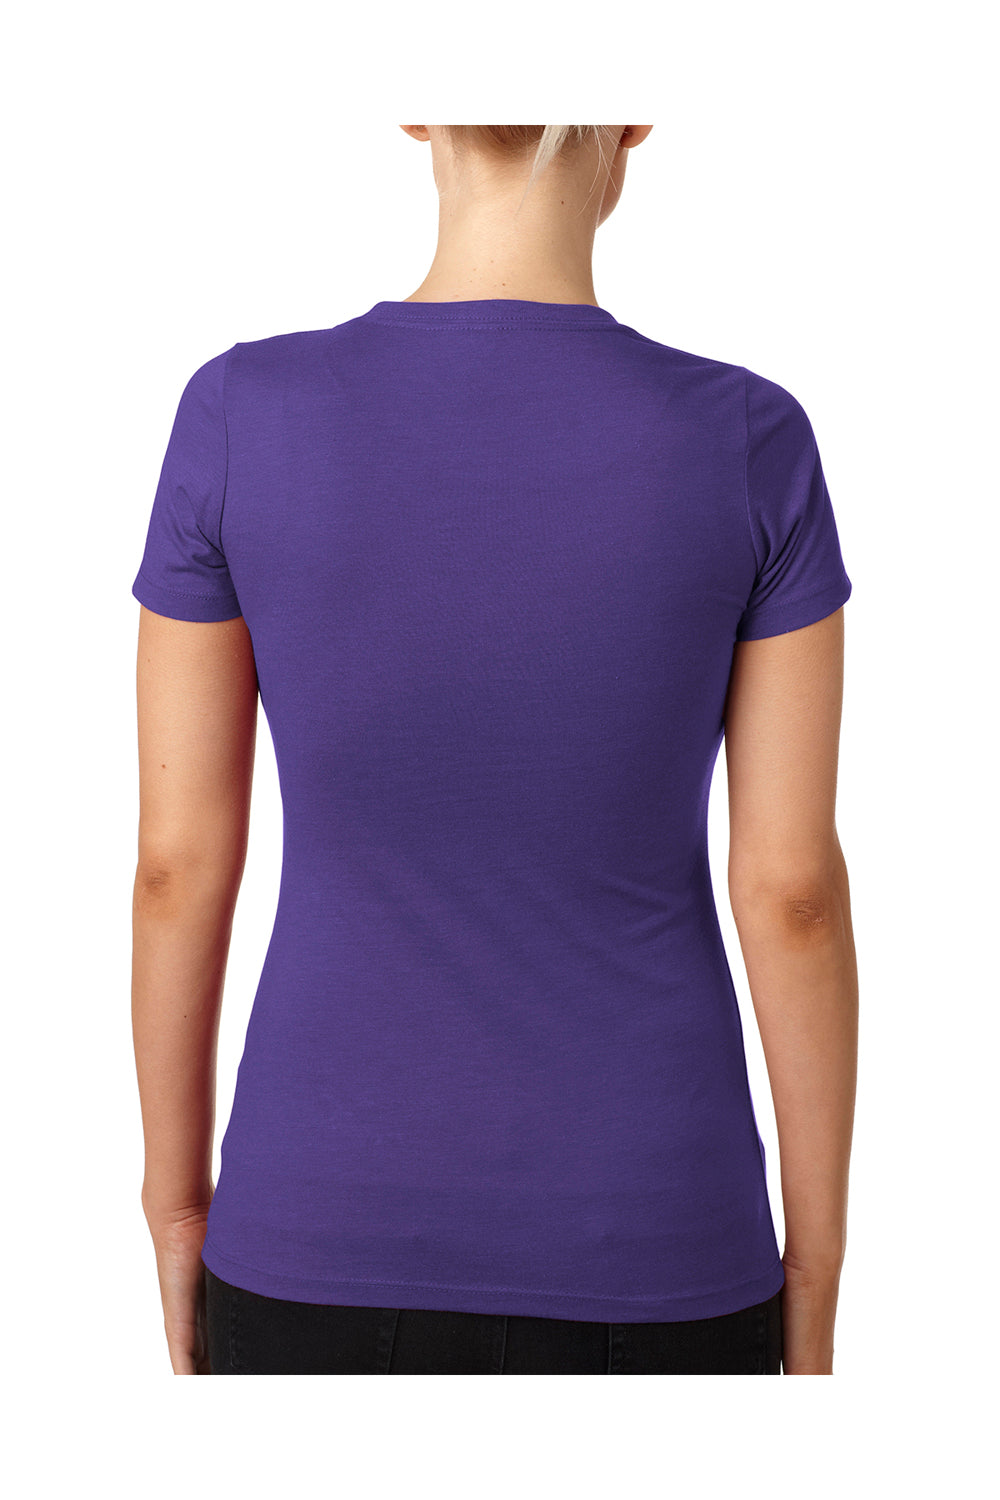 Next Level 6610 Womens CVC Jersey Short Sleeve Crewneck T-Shirt Purple Rush Back